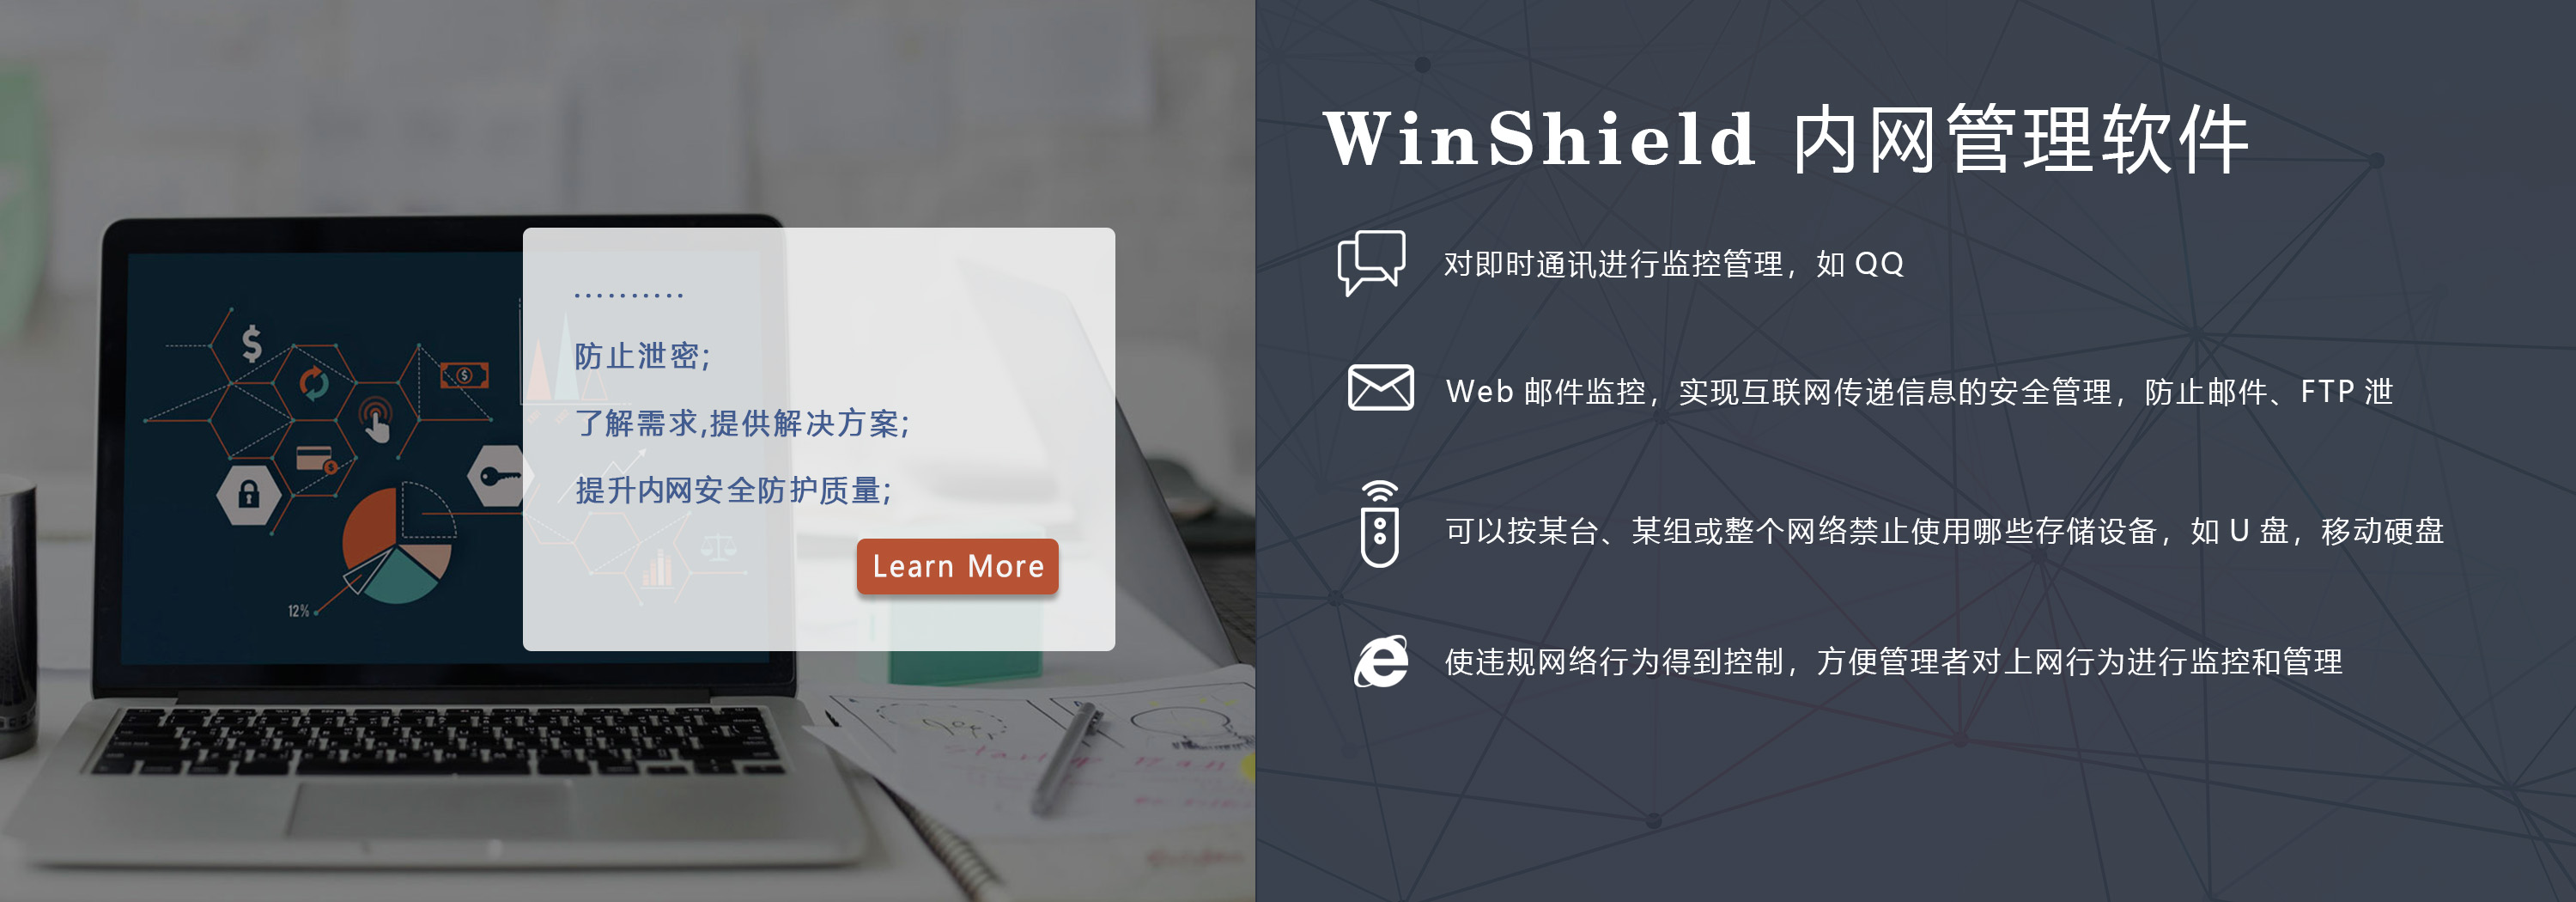 WinShield局域网管理软件